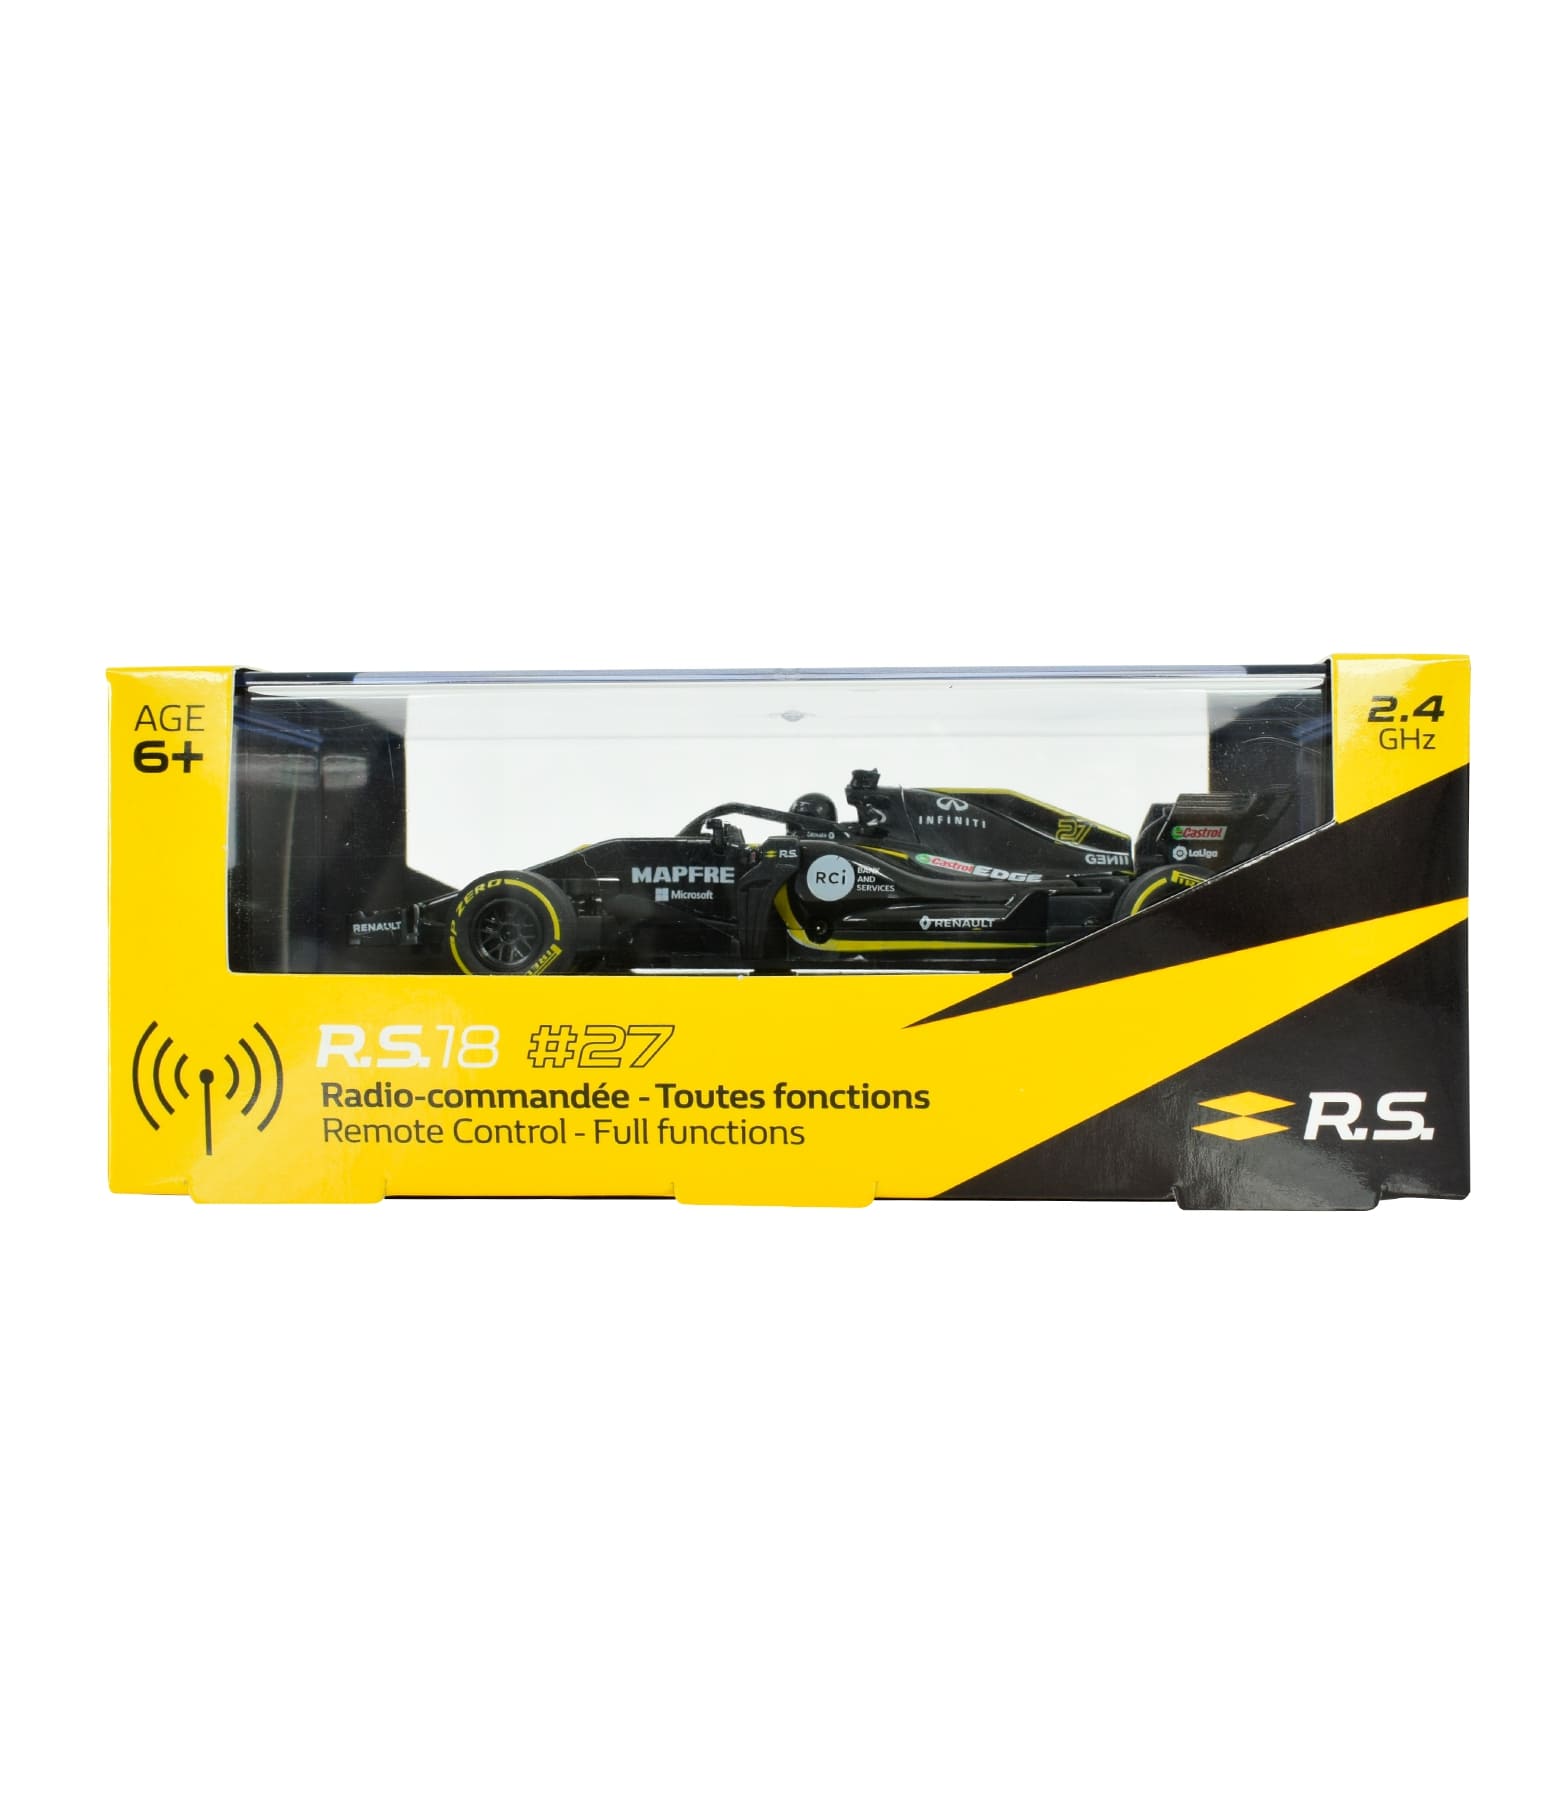 Renault F1 radio-commandée RS #55 - miniature Renault Formule 1